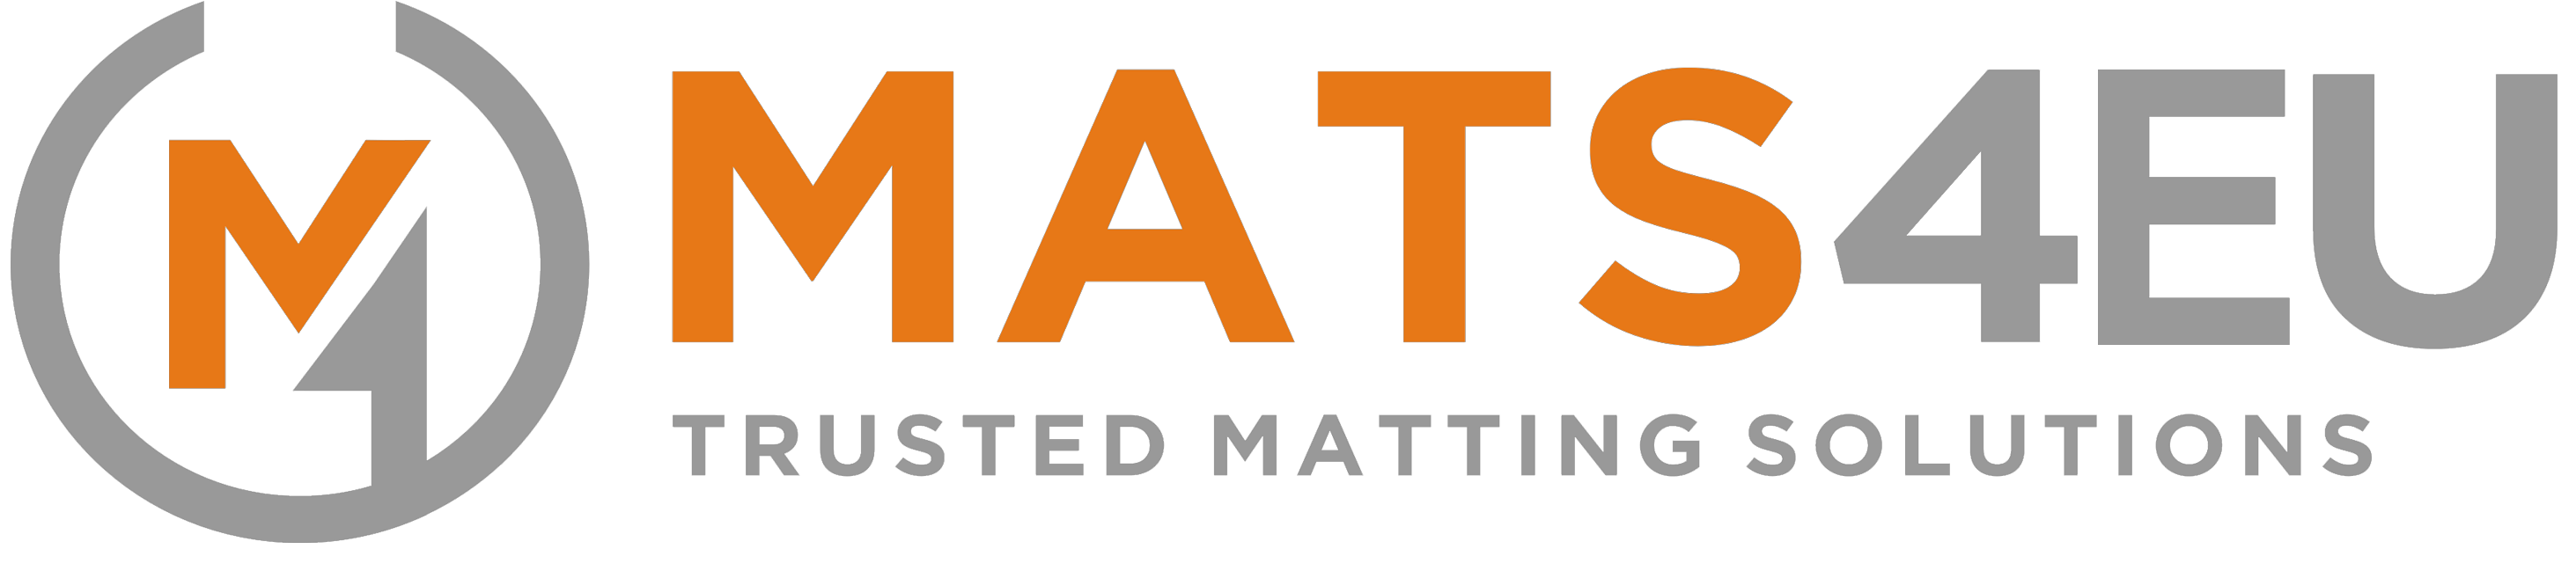 Mats4EU Logo Image